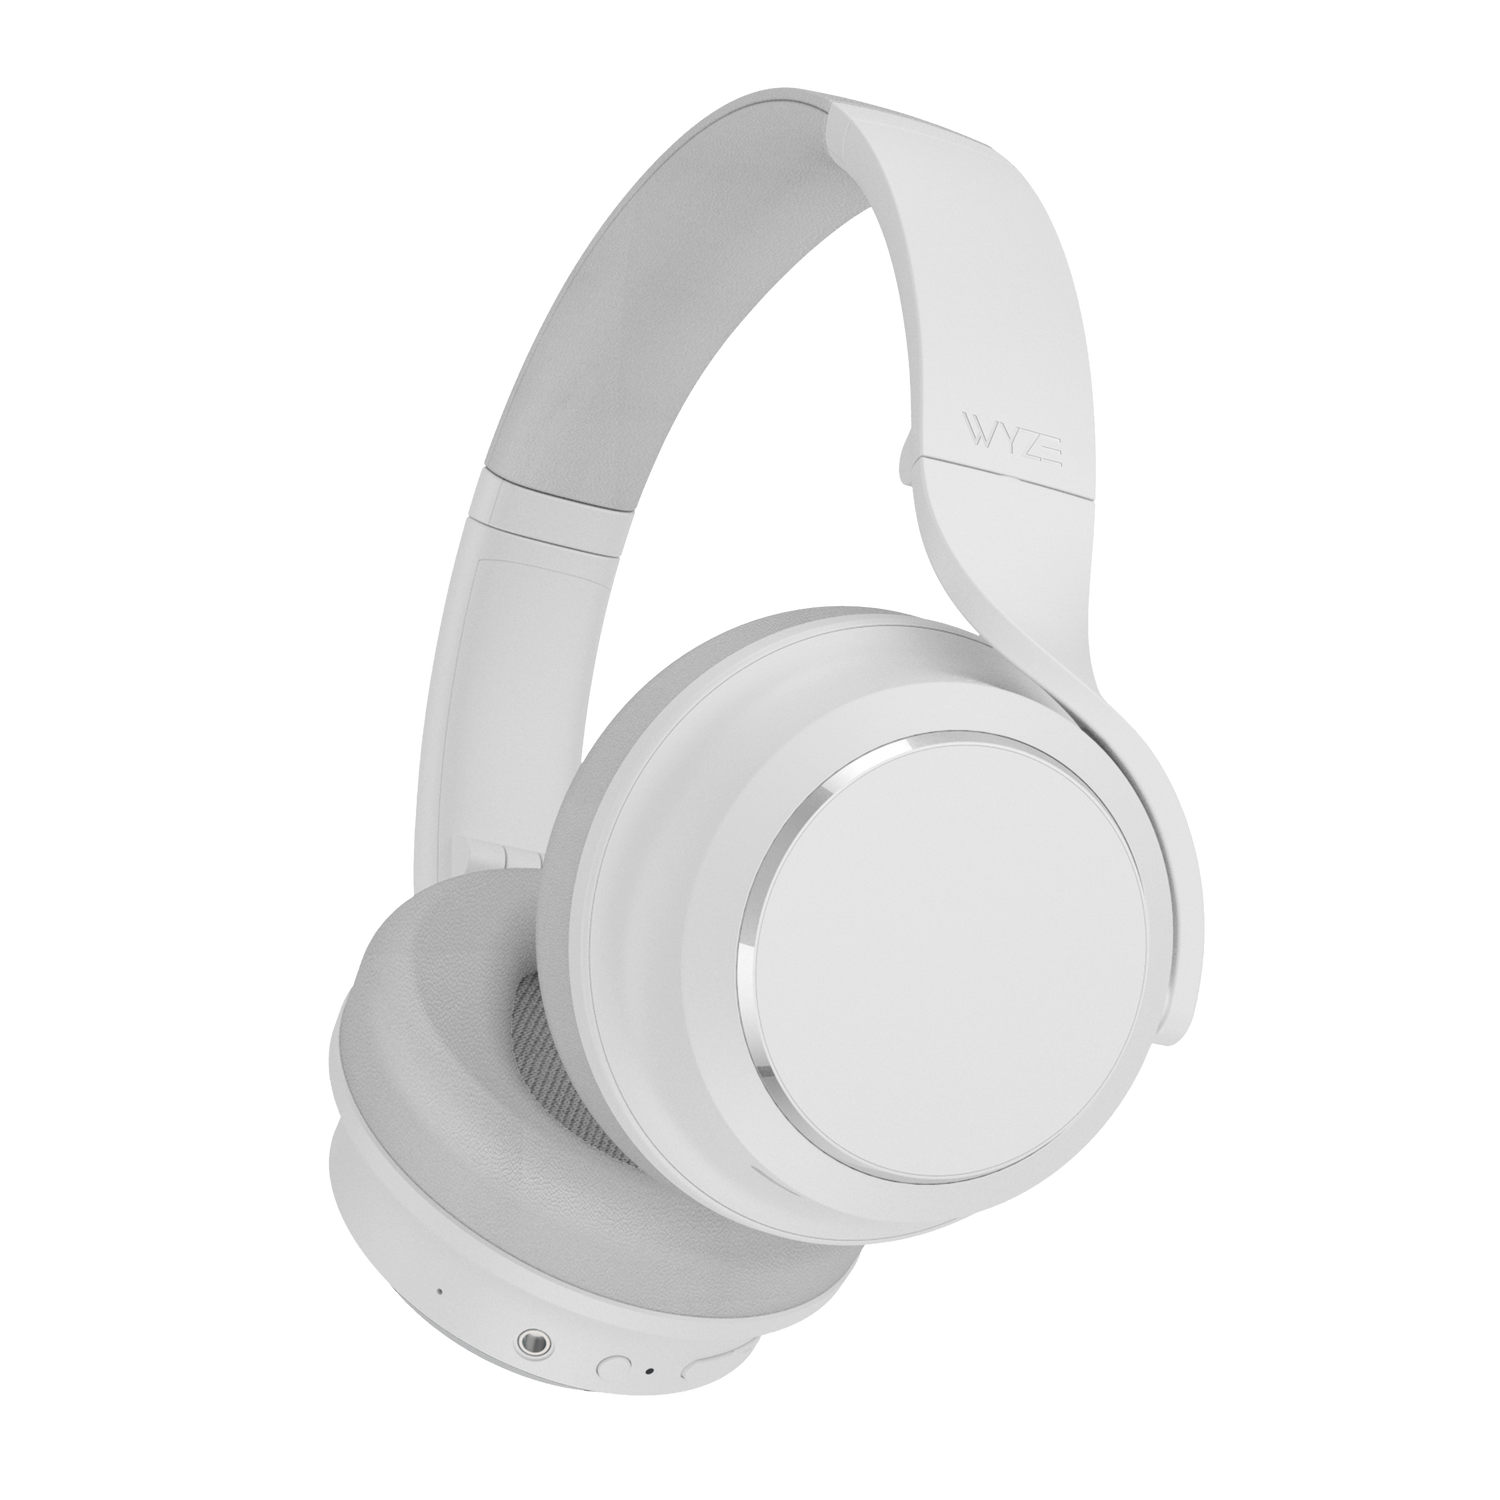 White Wyze Noise Cancelling Headphones